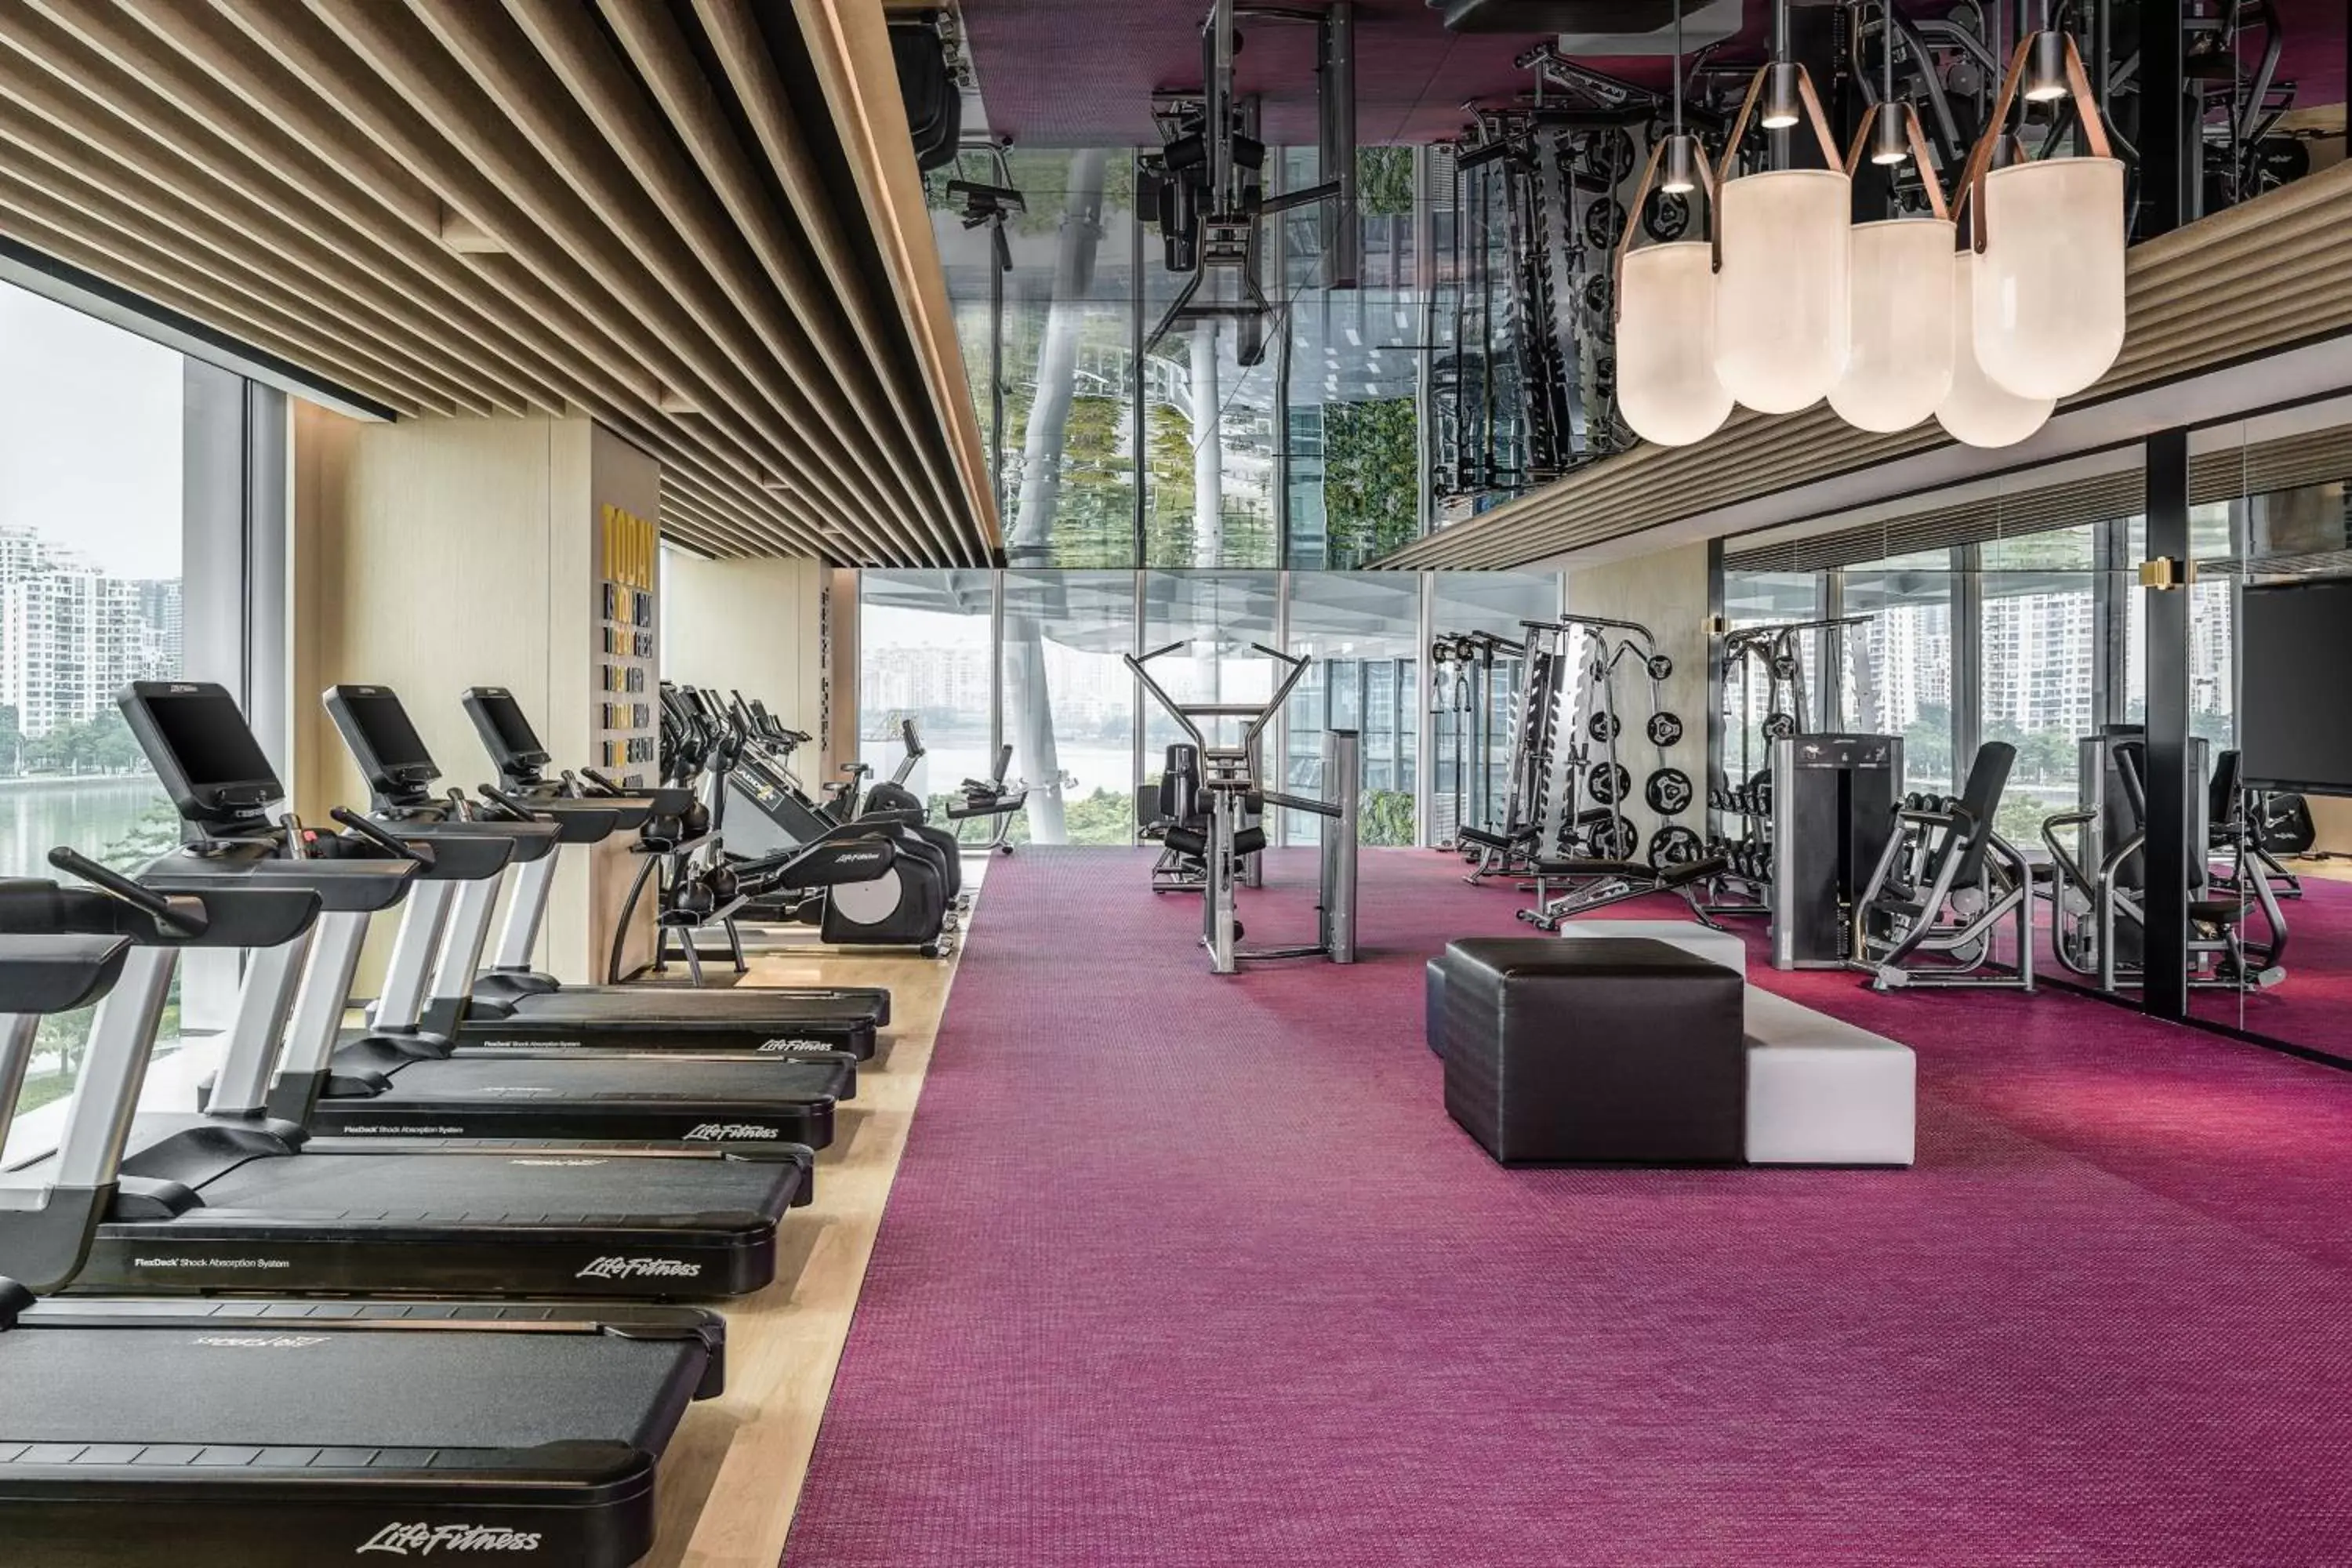 Fitness centre/facilities, Fitness Center/Facilities in Renaissance Zhuhai Hotel